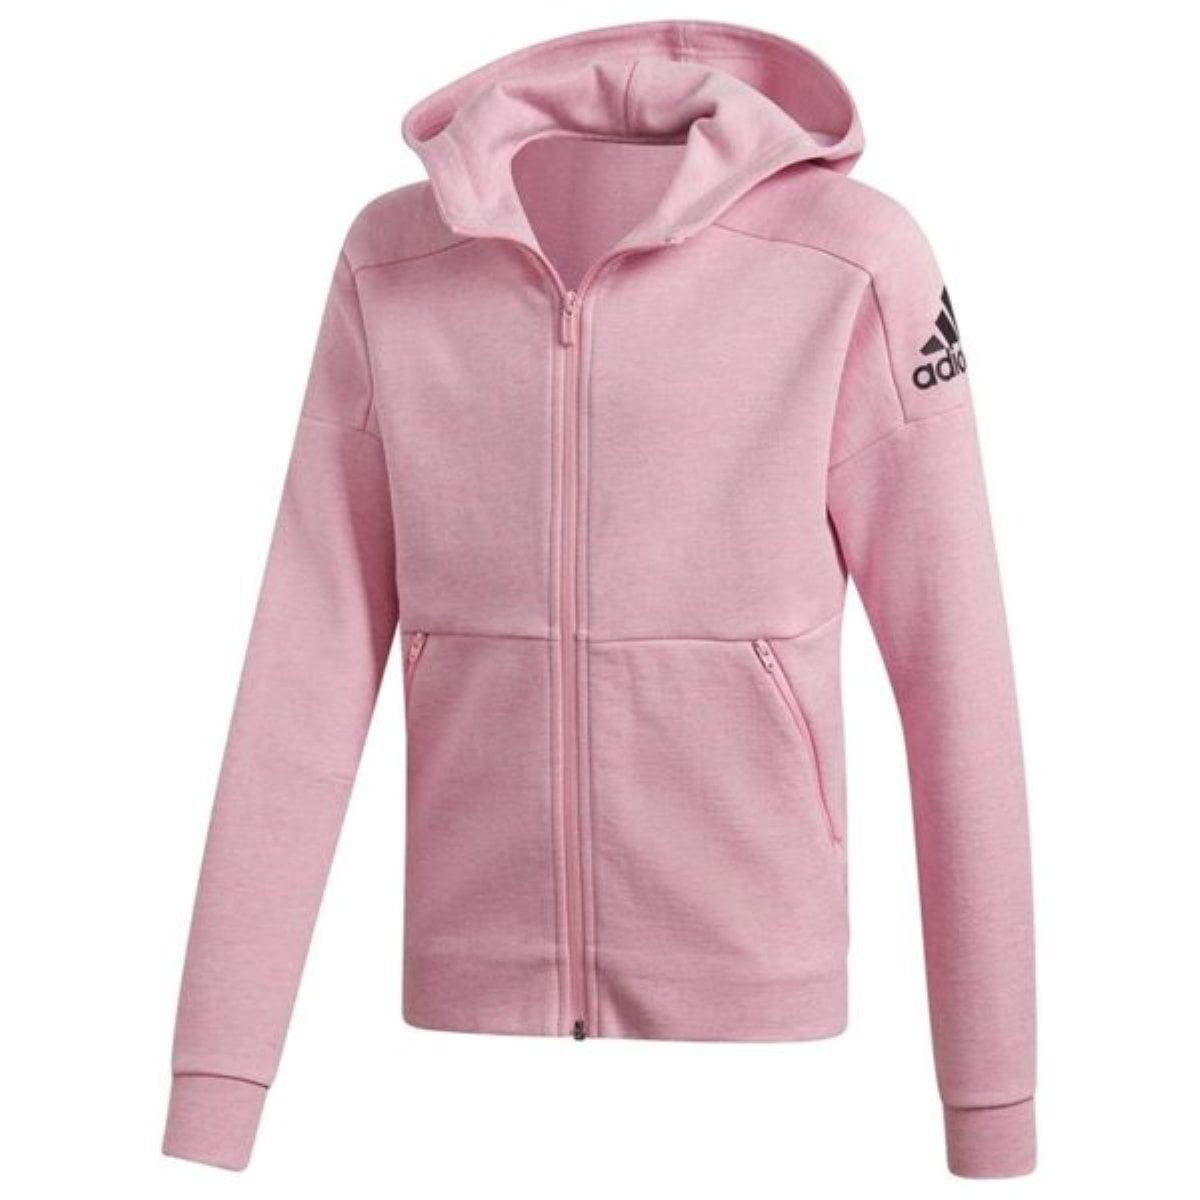 adidas girl jacket pink